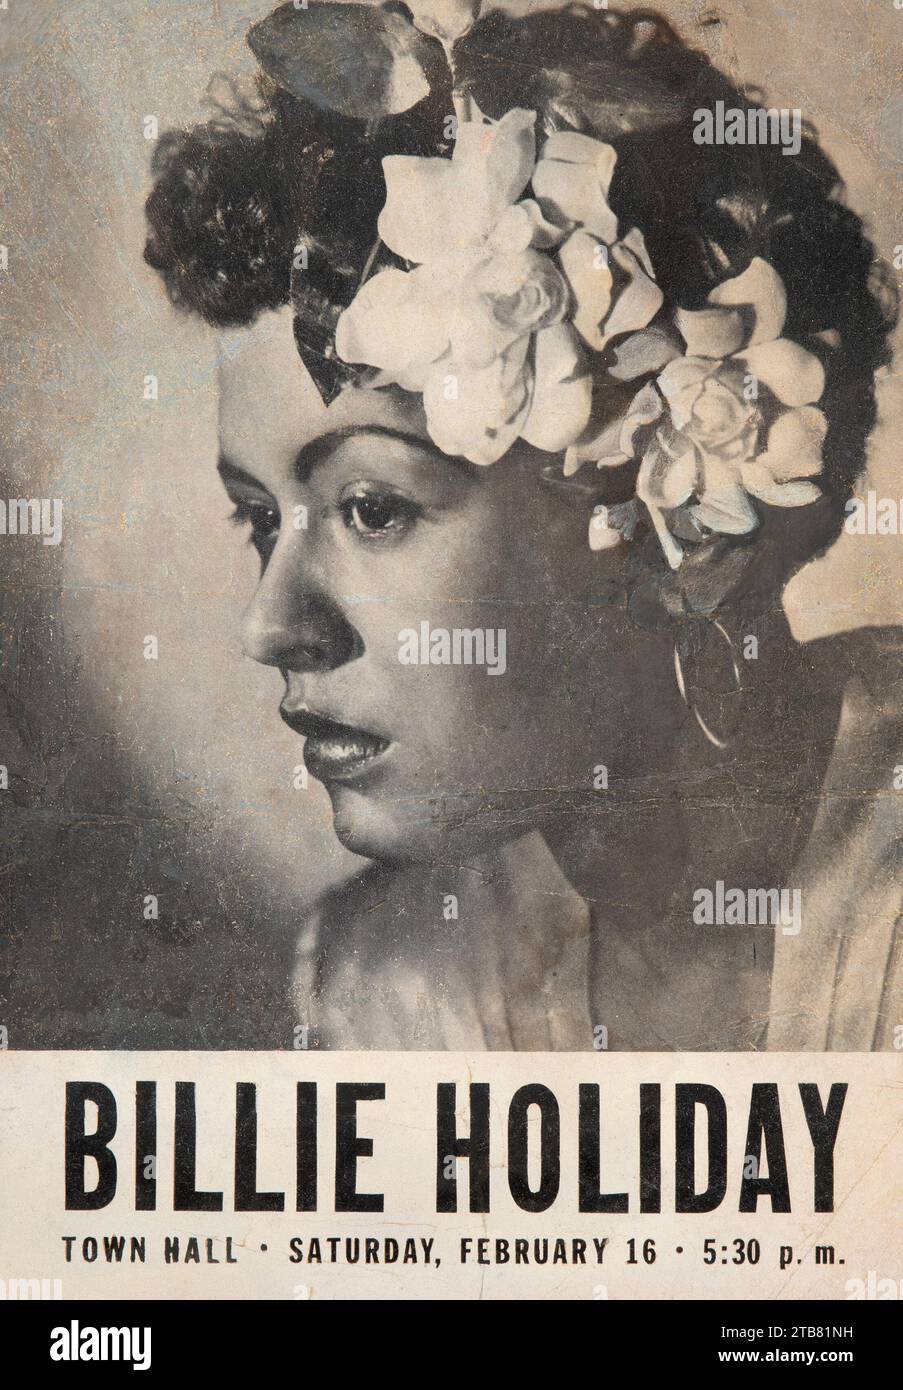 Affiche Jazz vintage - Billie Holiday February 16, 1946 New York City, Town Hall, concert handbill - flyer Banque D'Images